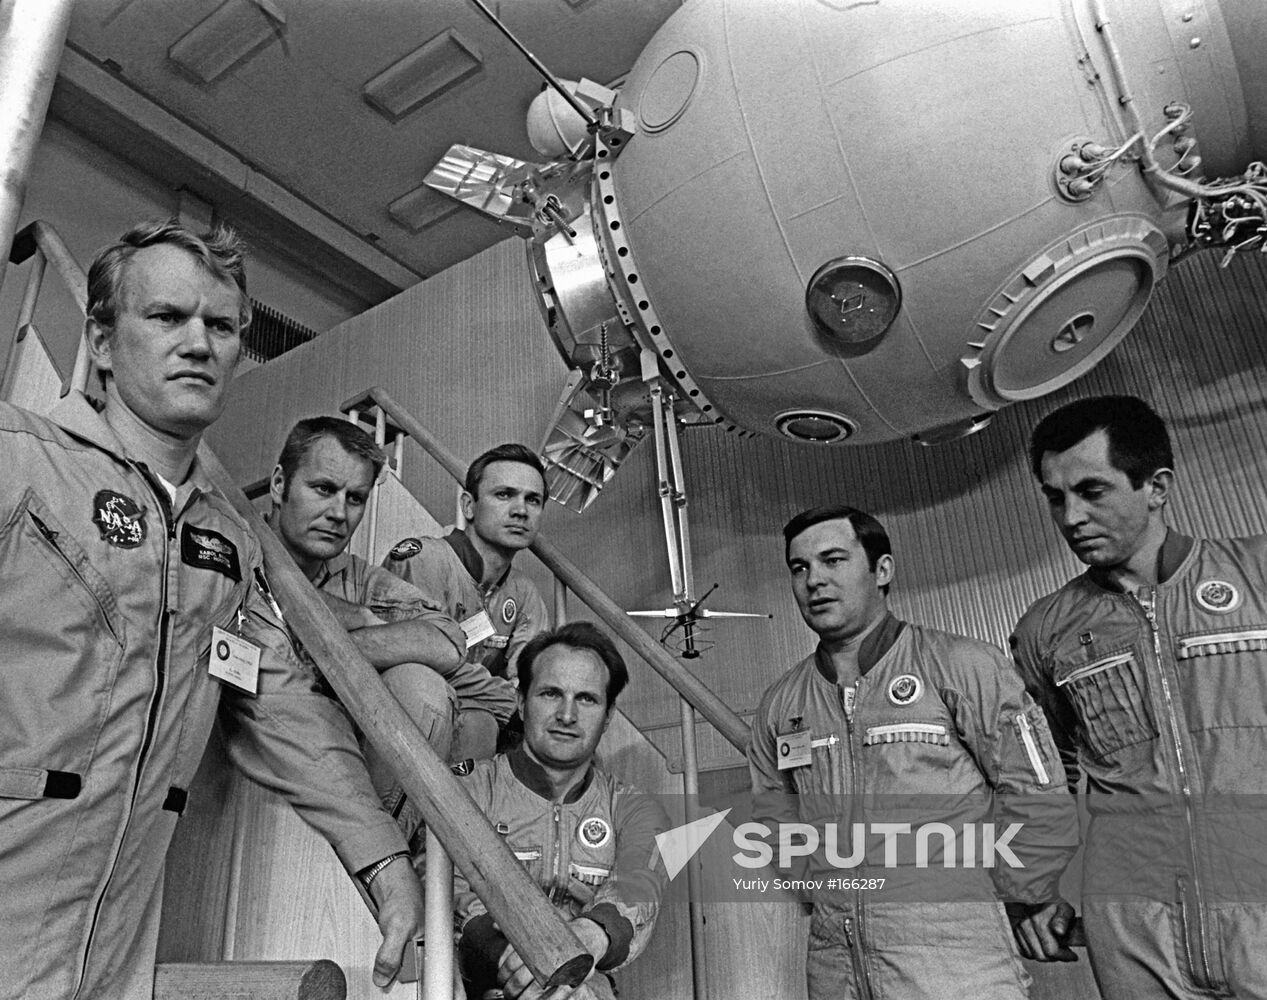 Soviet cosmonauts and US astronauts